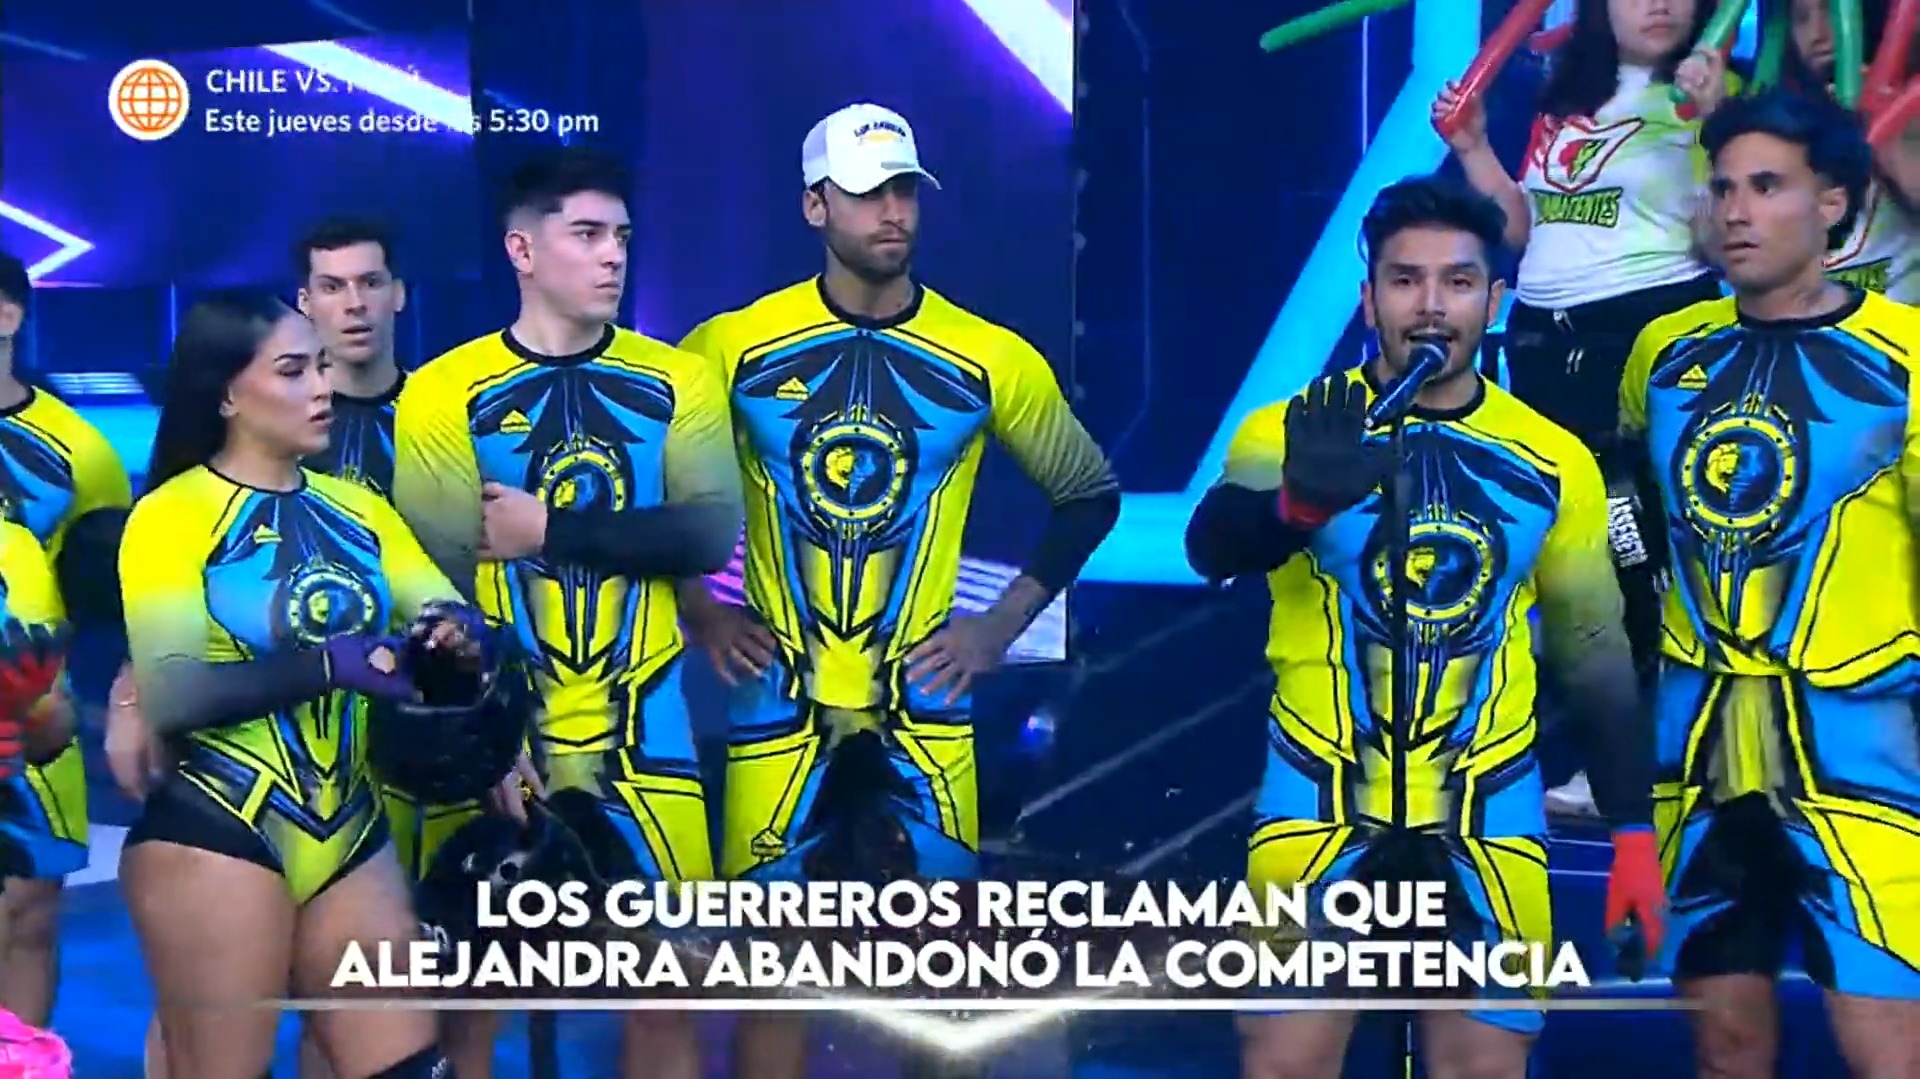 Rafael Cardozo reclamó que Alejandra Baigorria abandonó la competencia. Fuente: AméricaTV